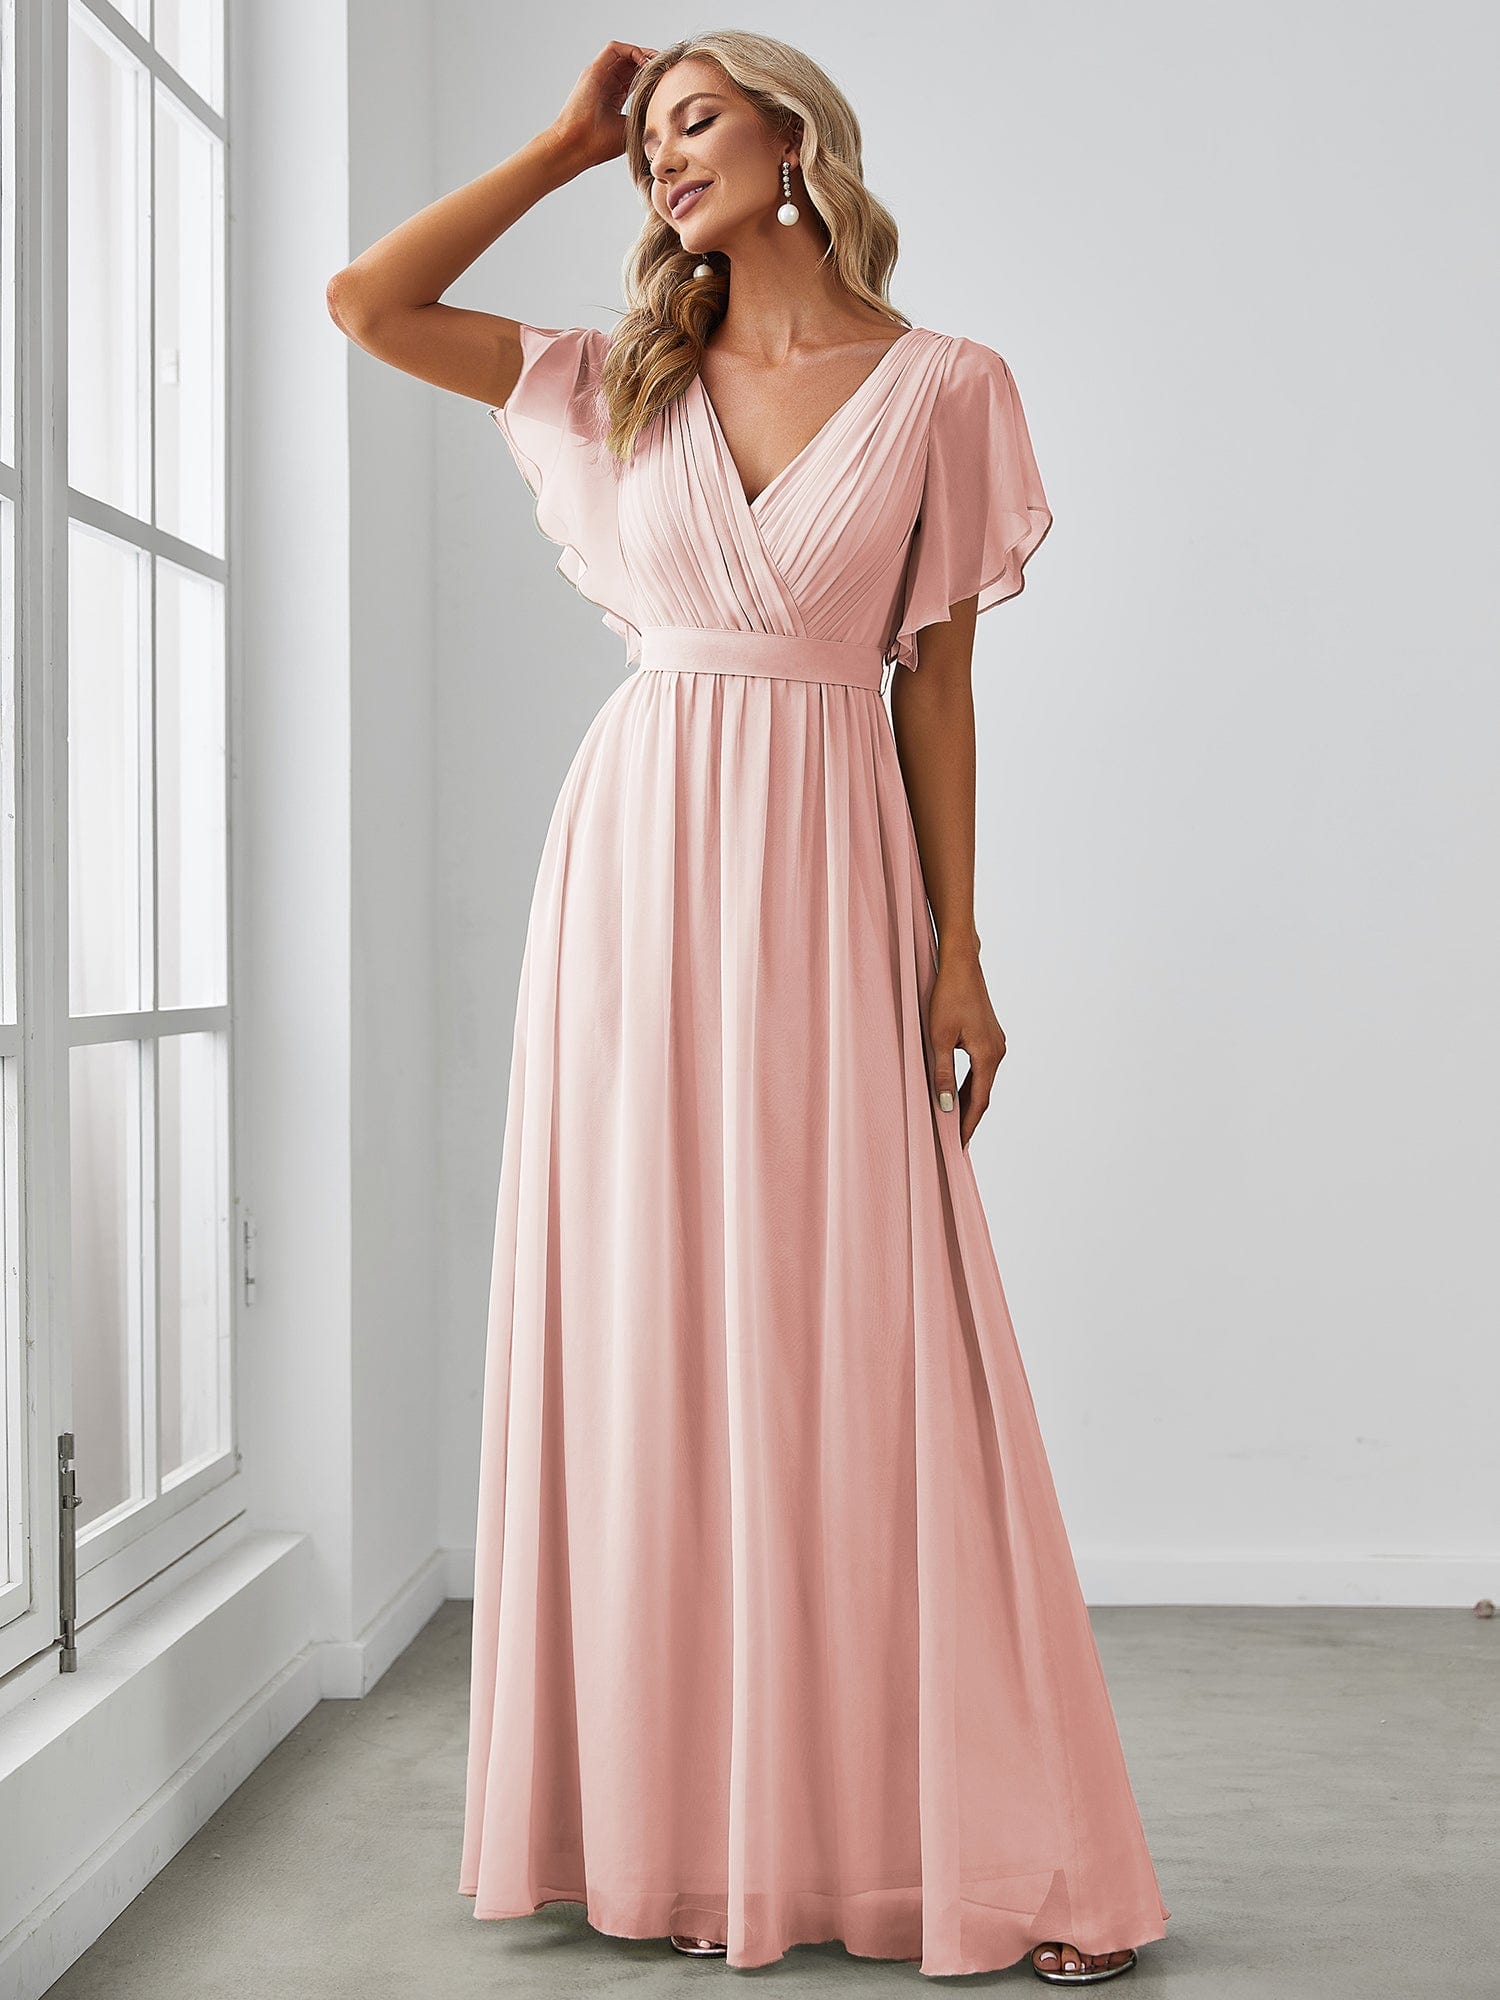 Buy Old Rose Bridesmaid Dress online | Lazada.com.ph